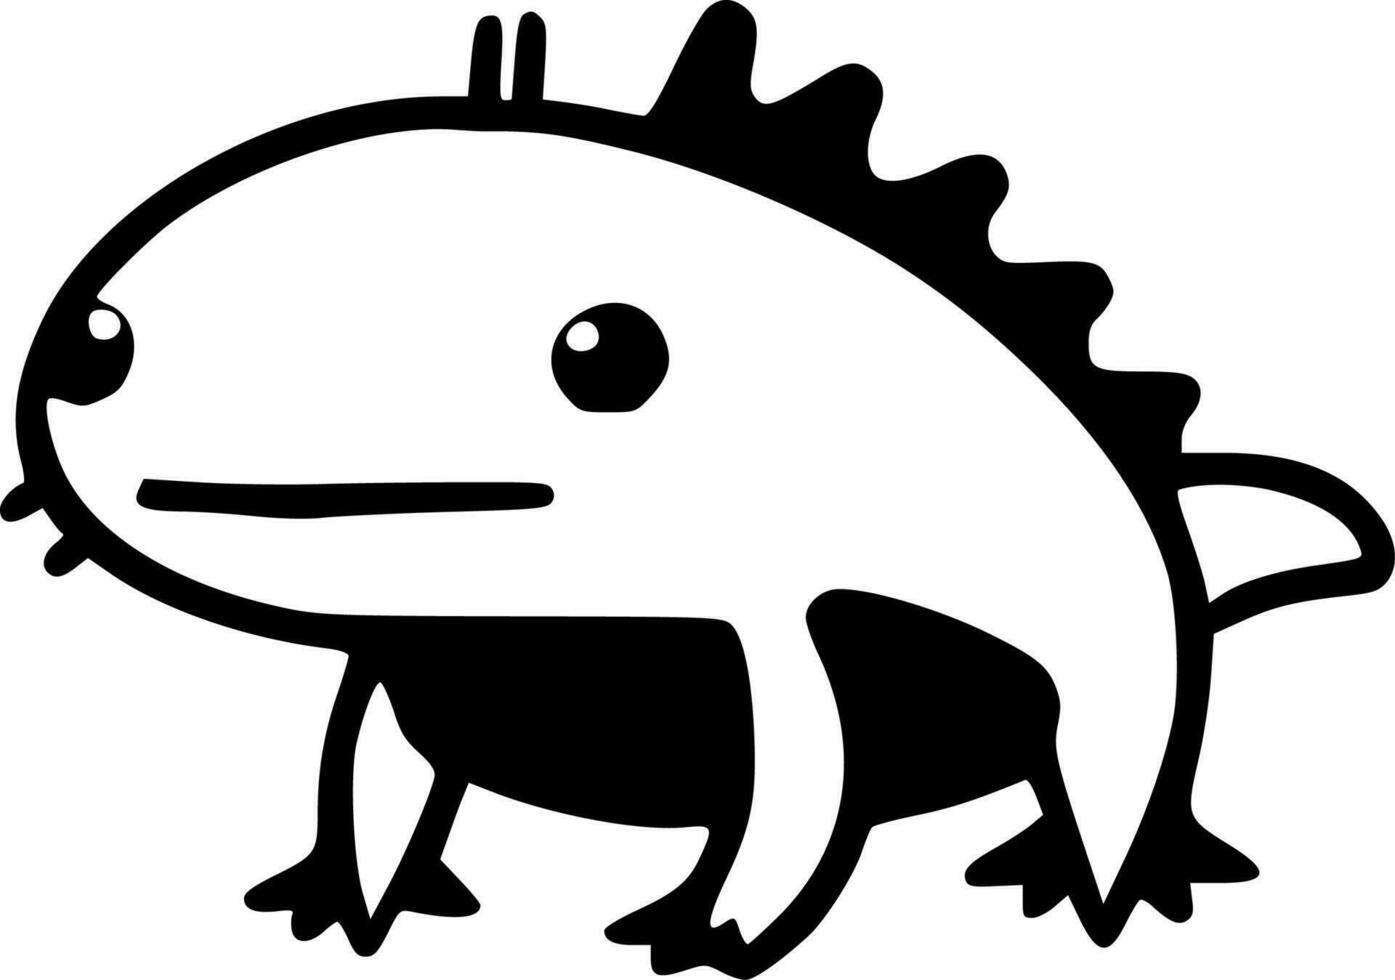 Axolotl, schwarz und Weiß Vektor Illustration